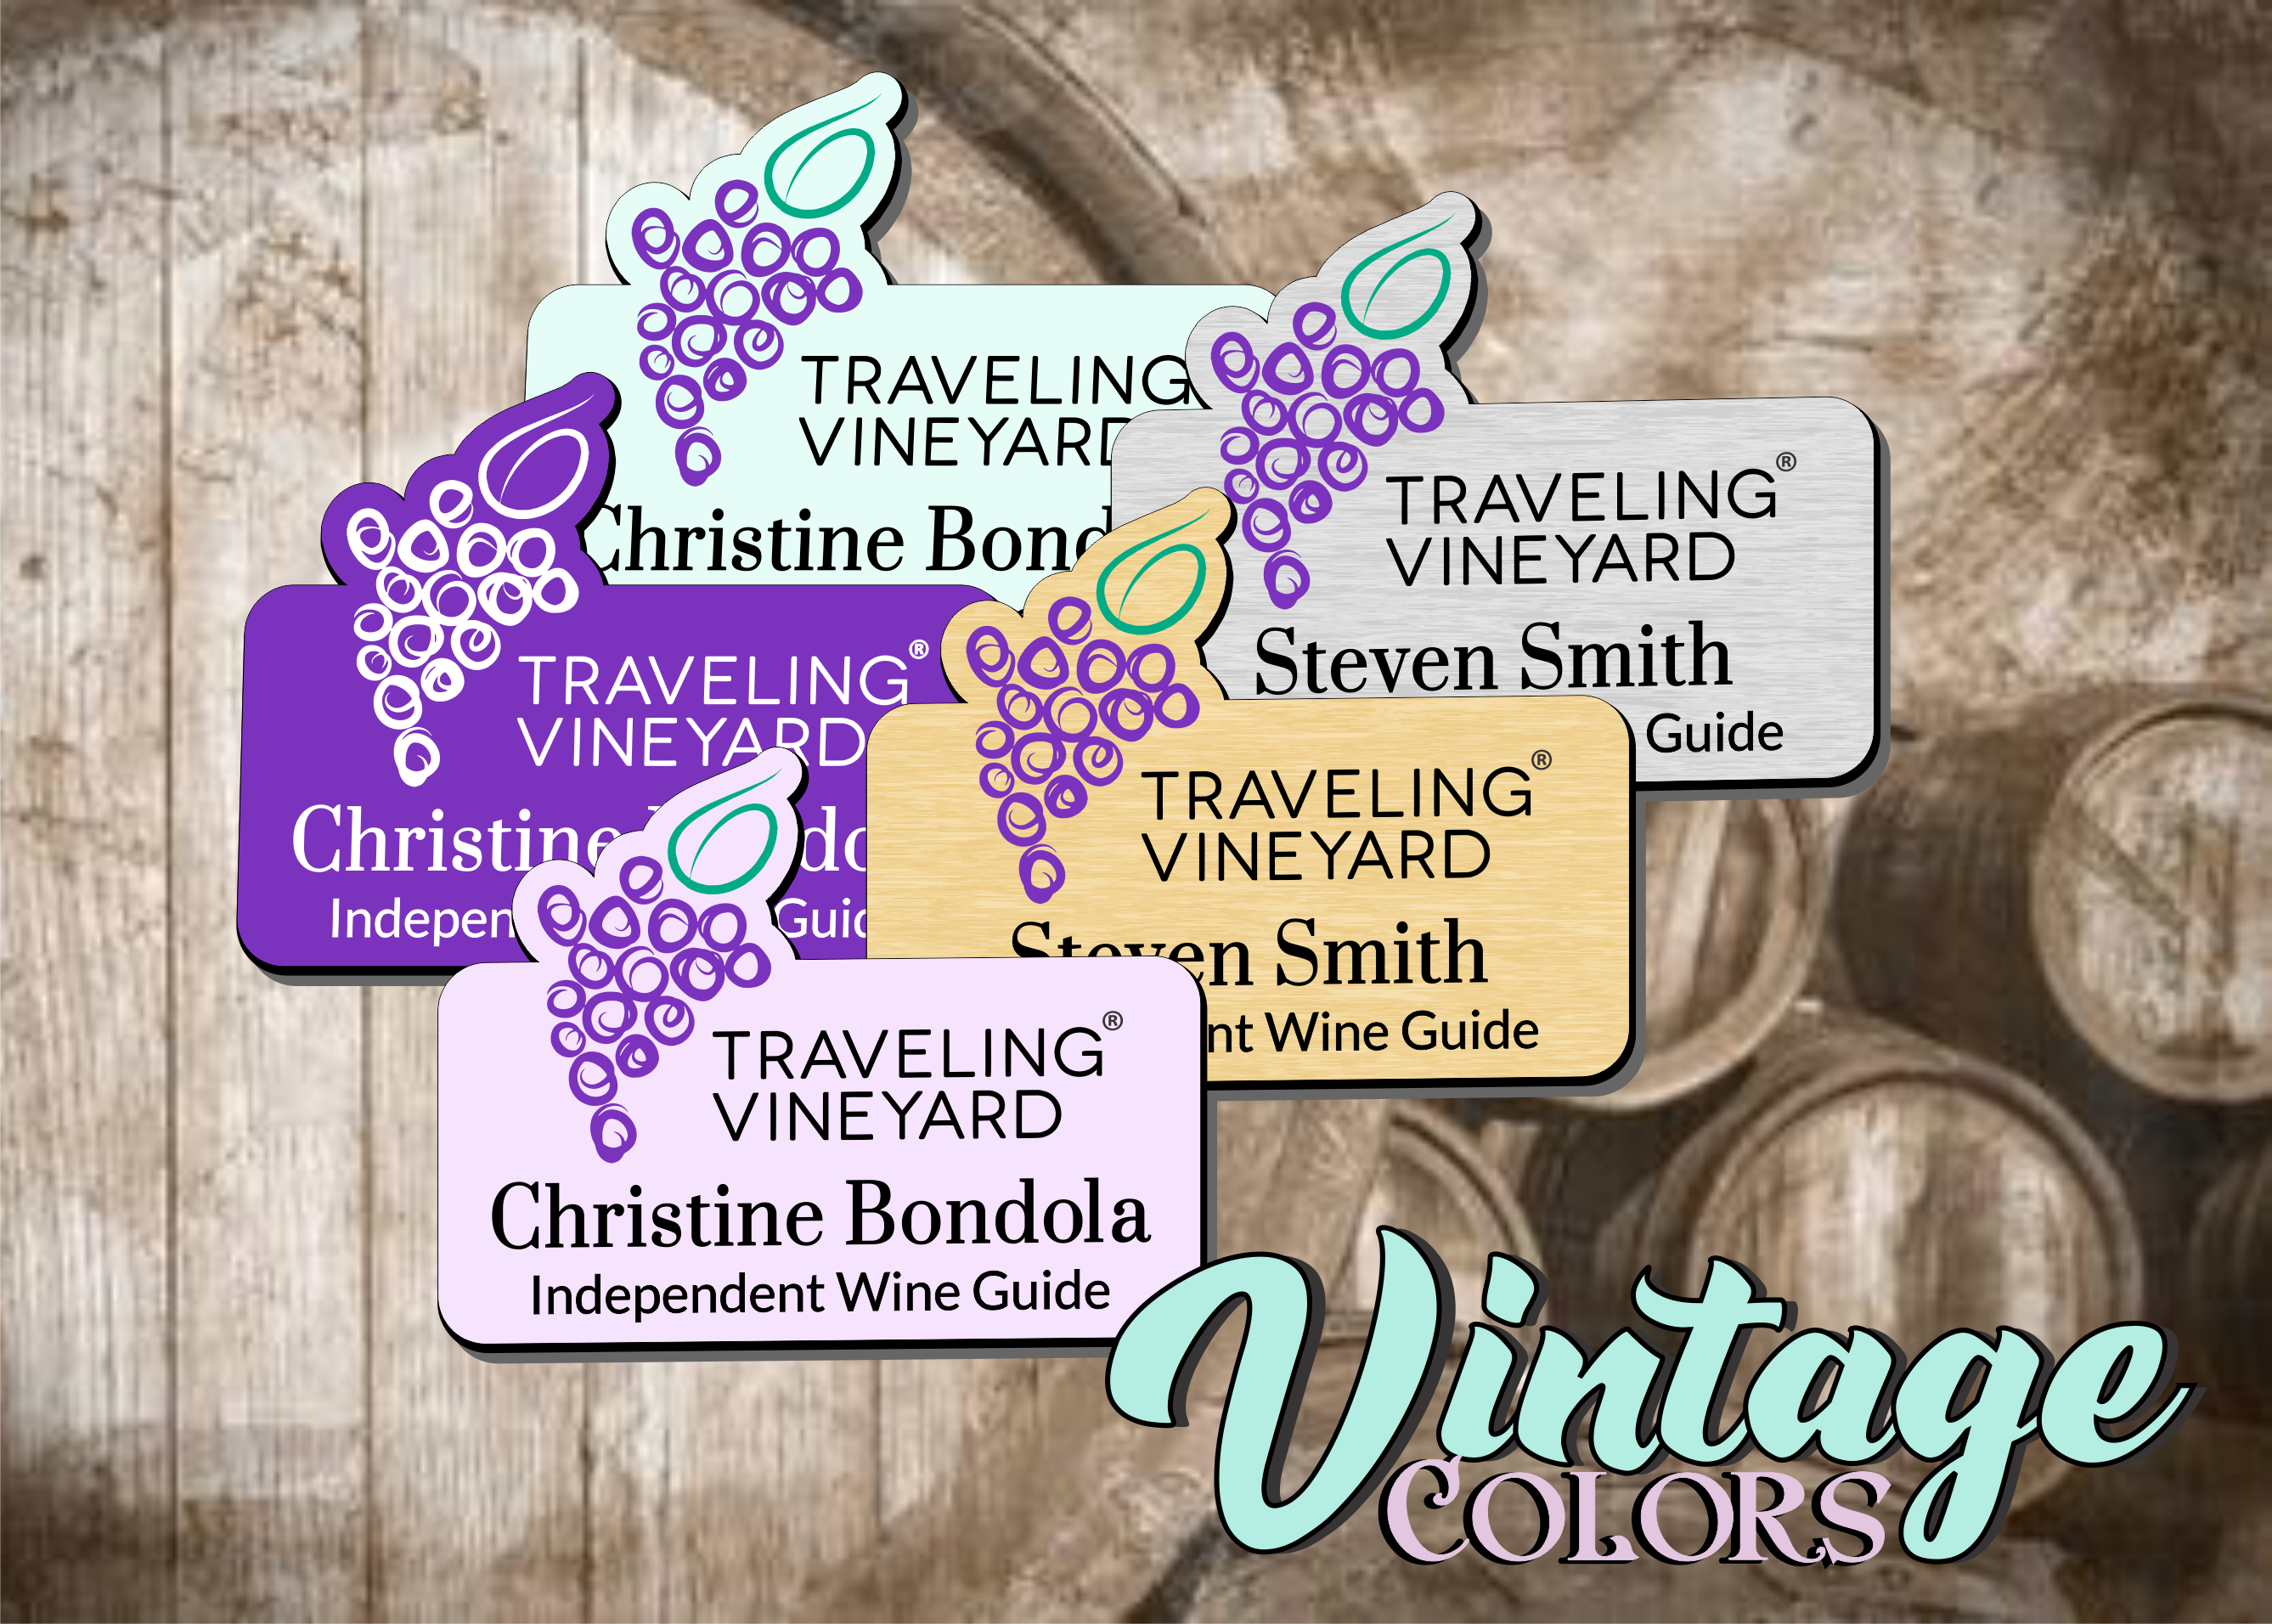 Traveling Vineyard Name Badges - Vintage Colors